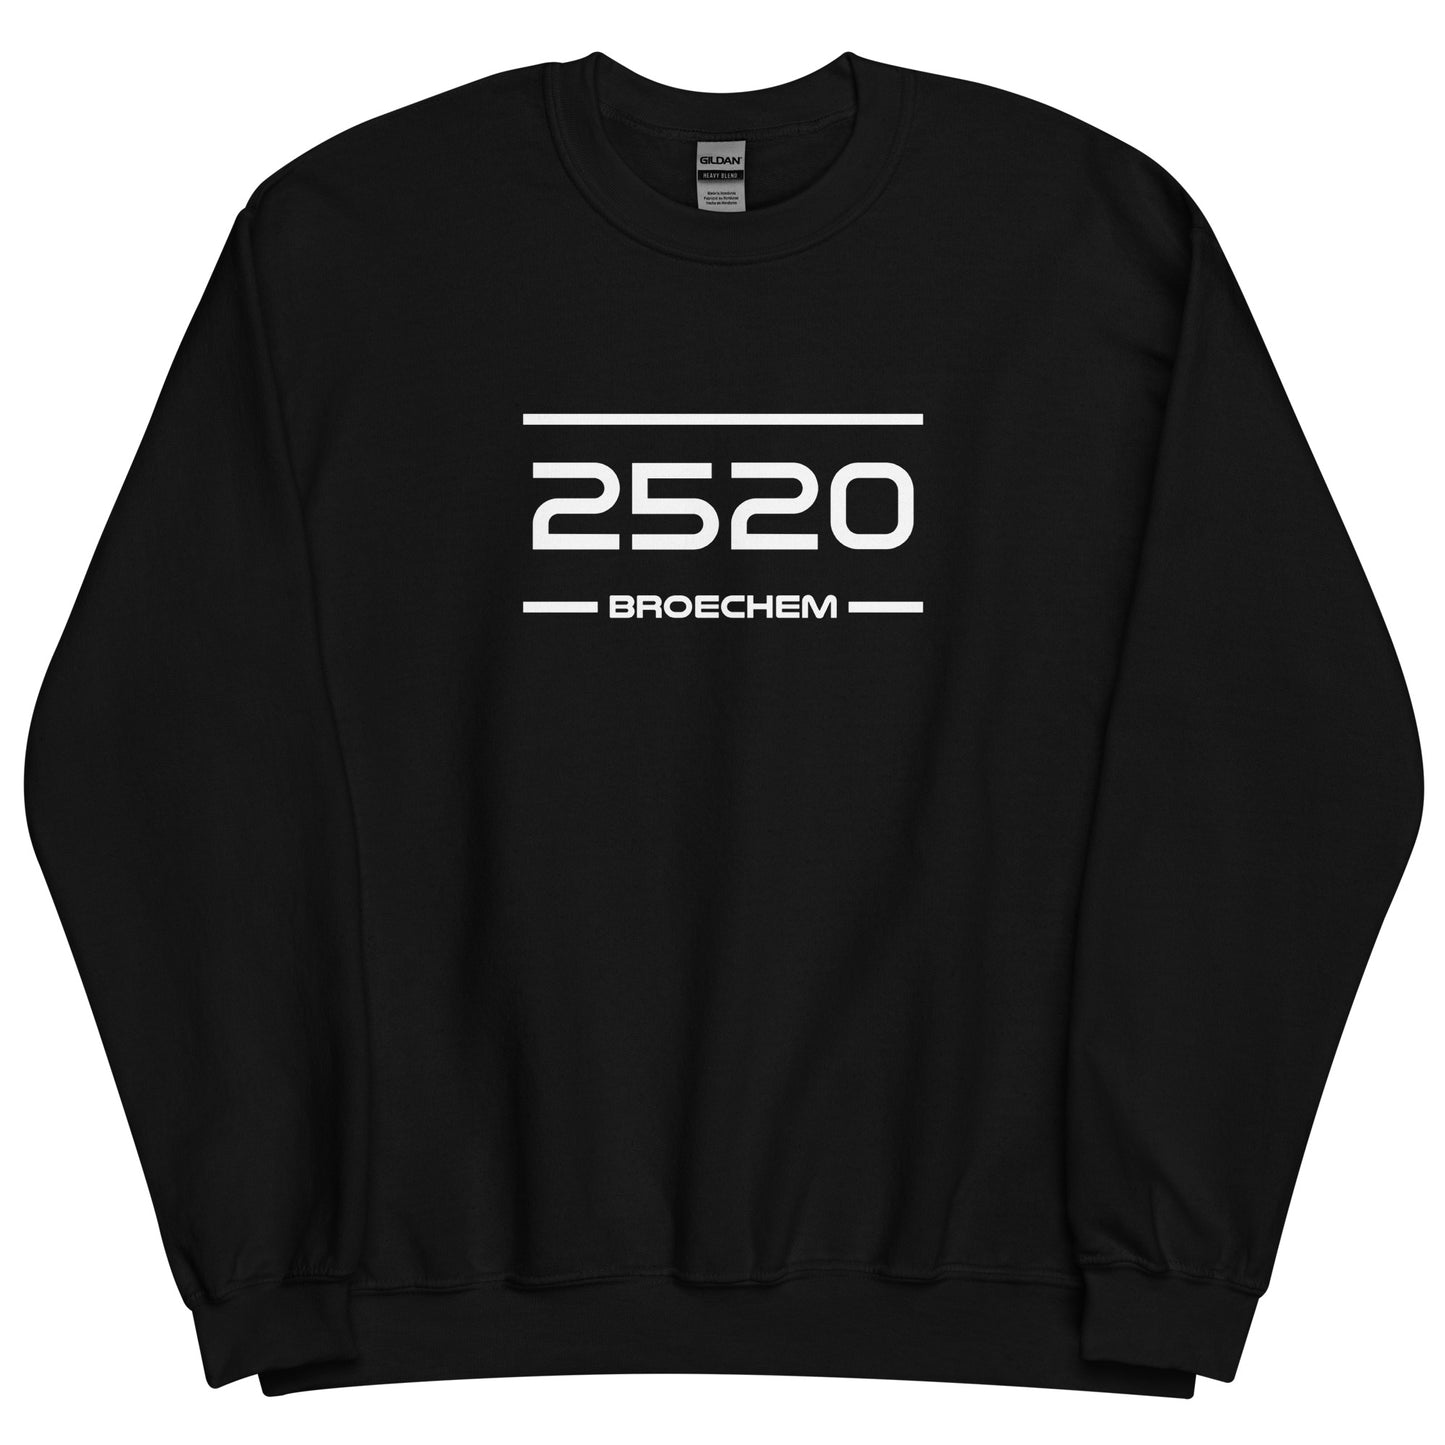 Sweater - 2520 - Broechem (M/V)